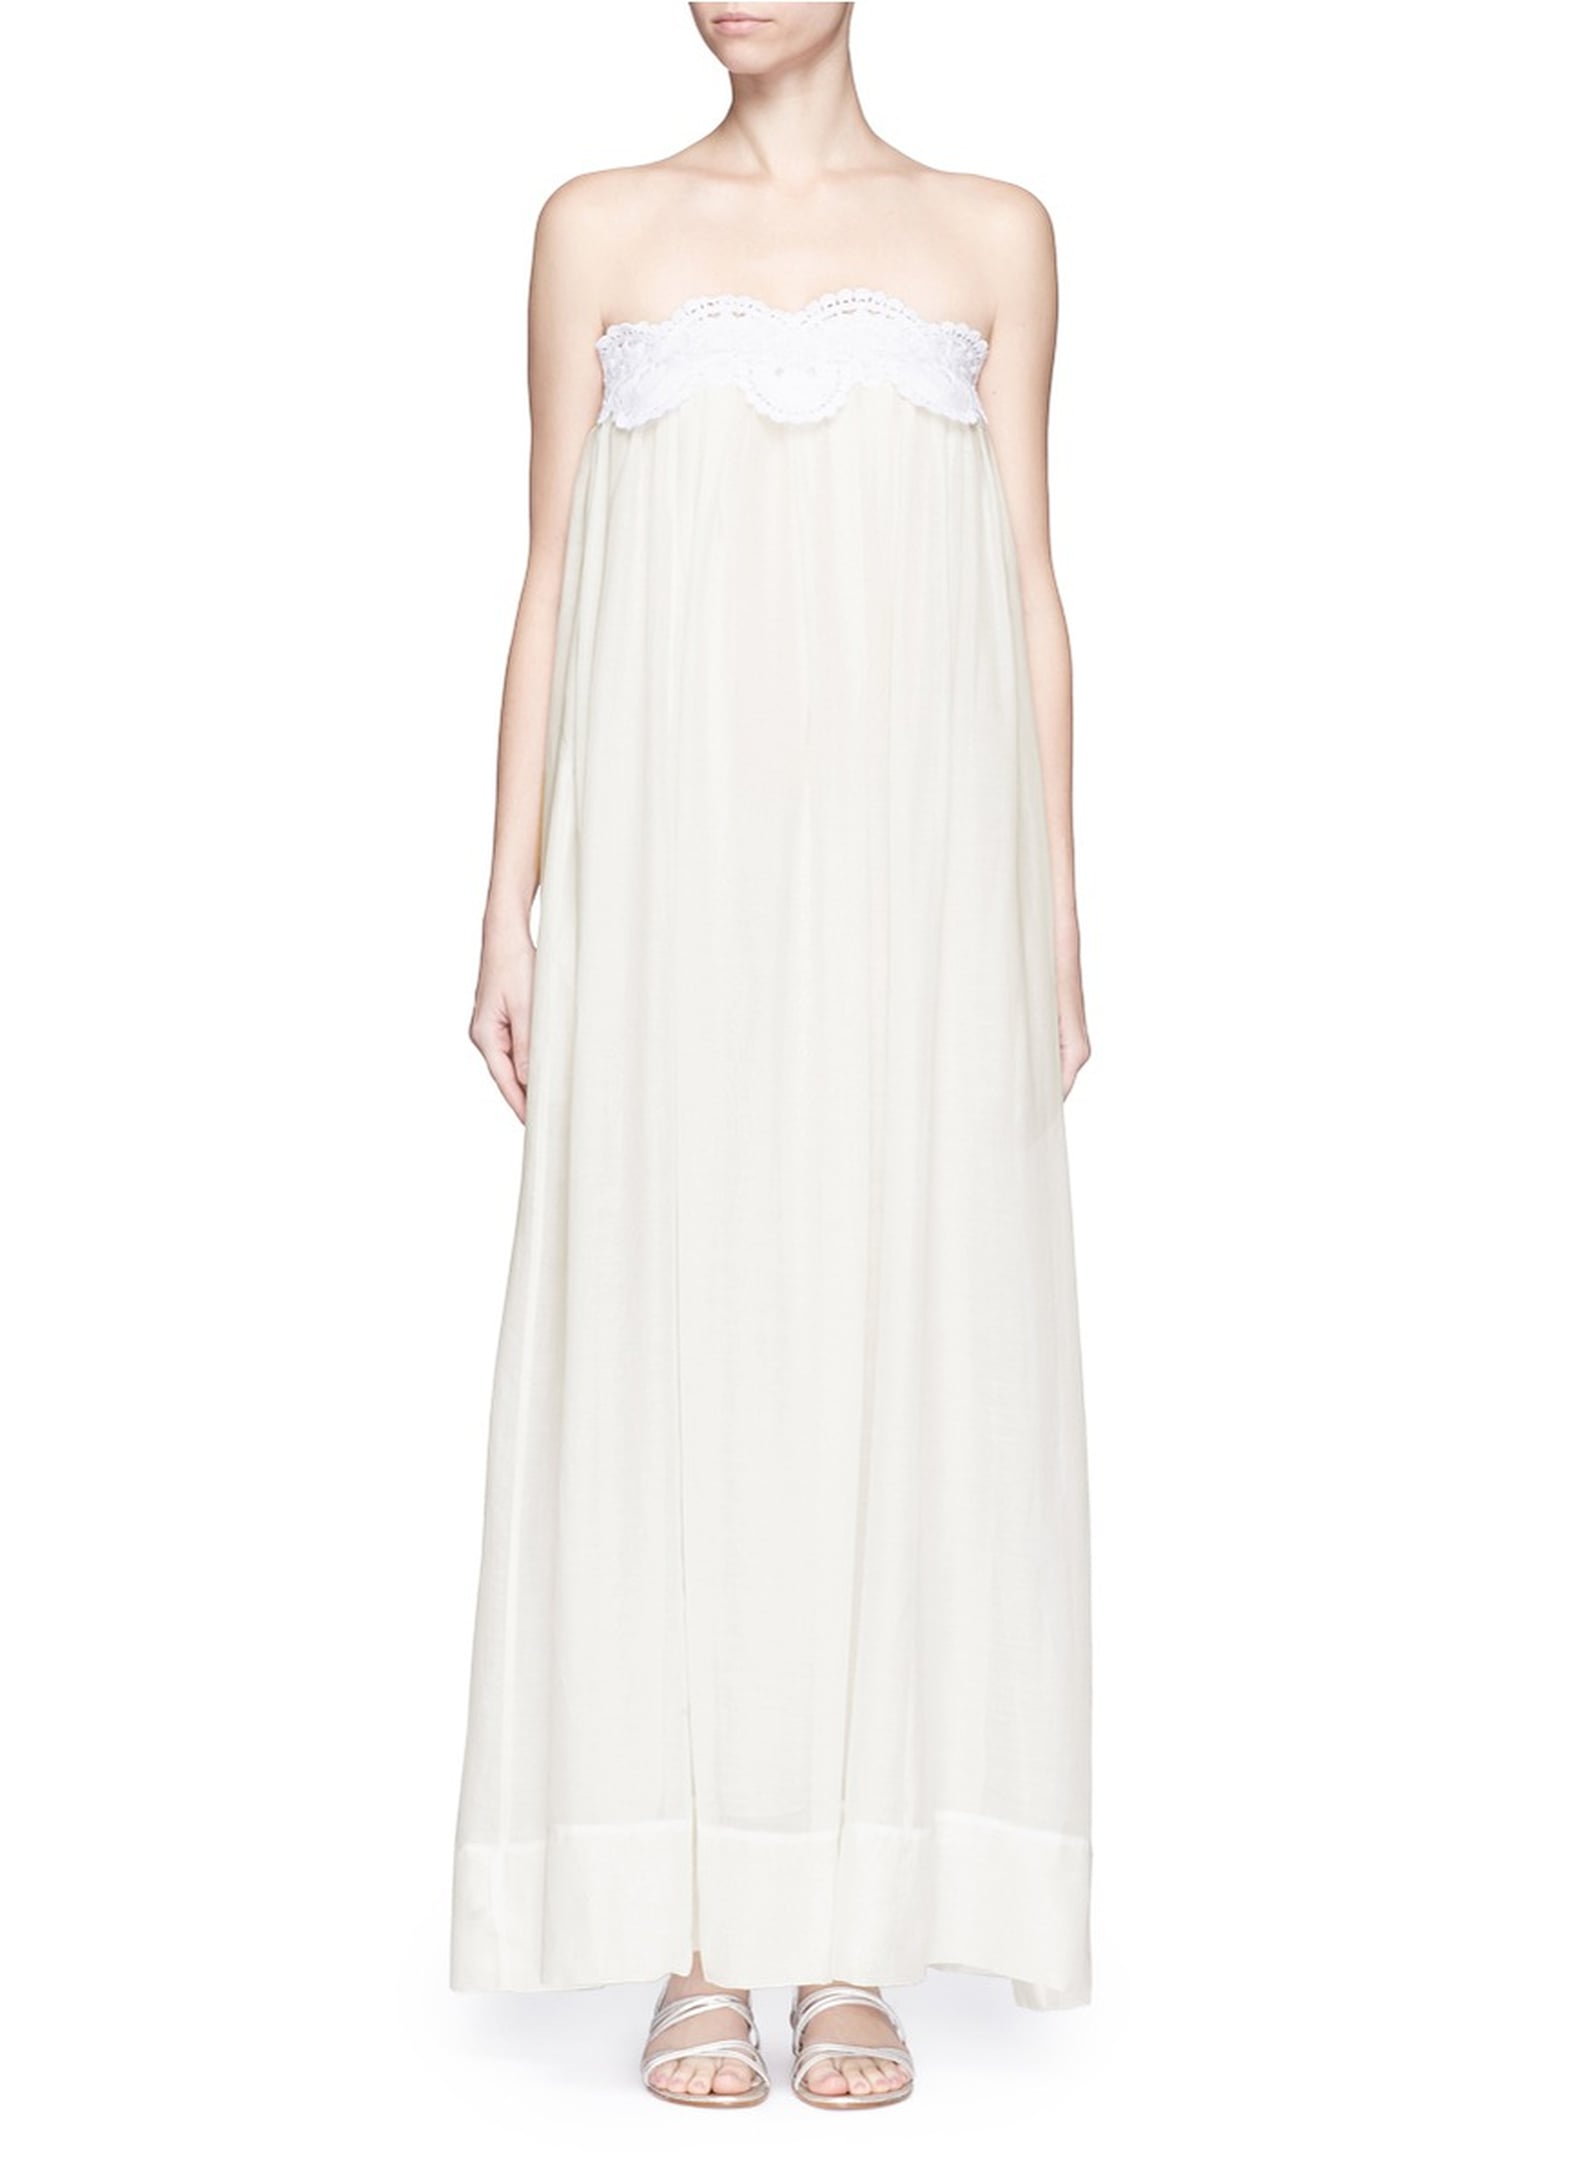 Best White Dresses For Summer | POPSUGAR Fashion